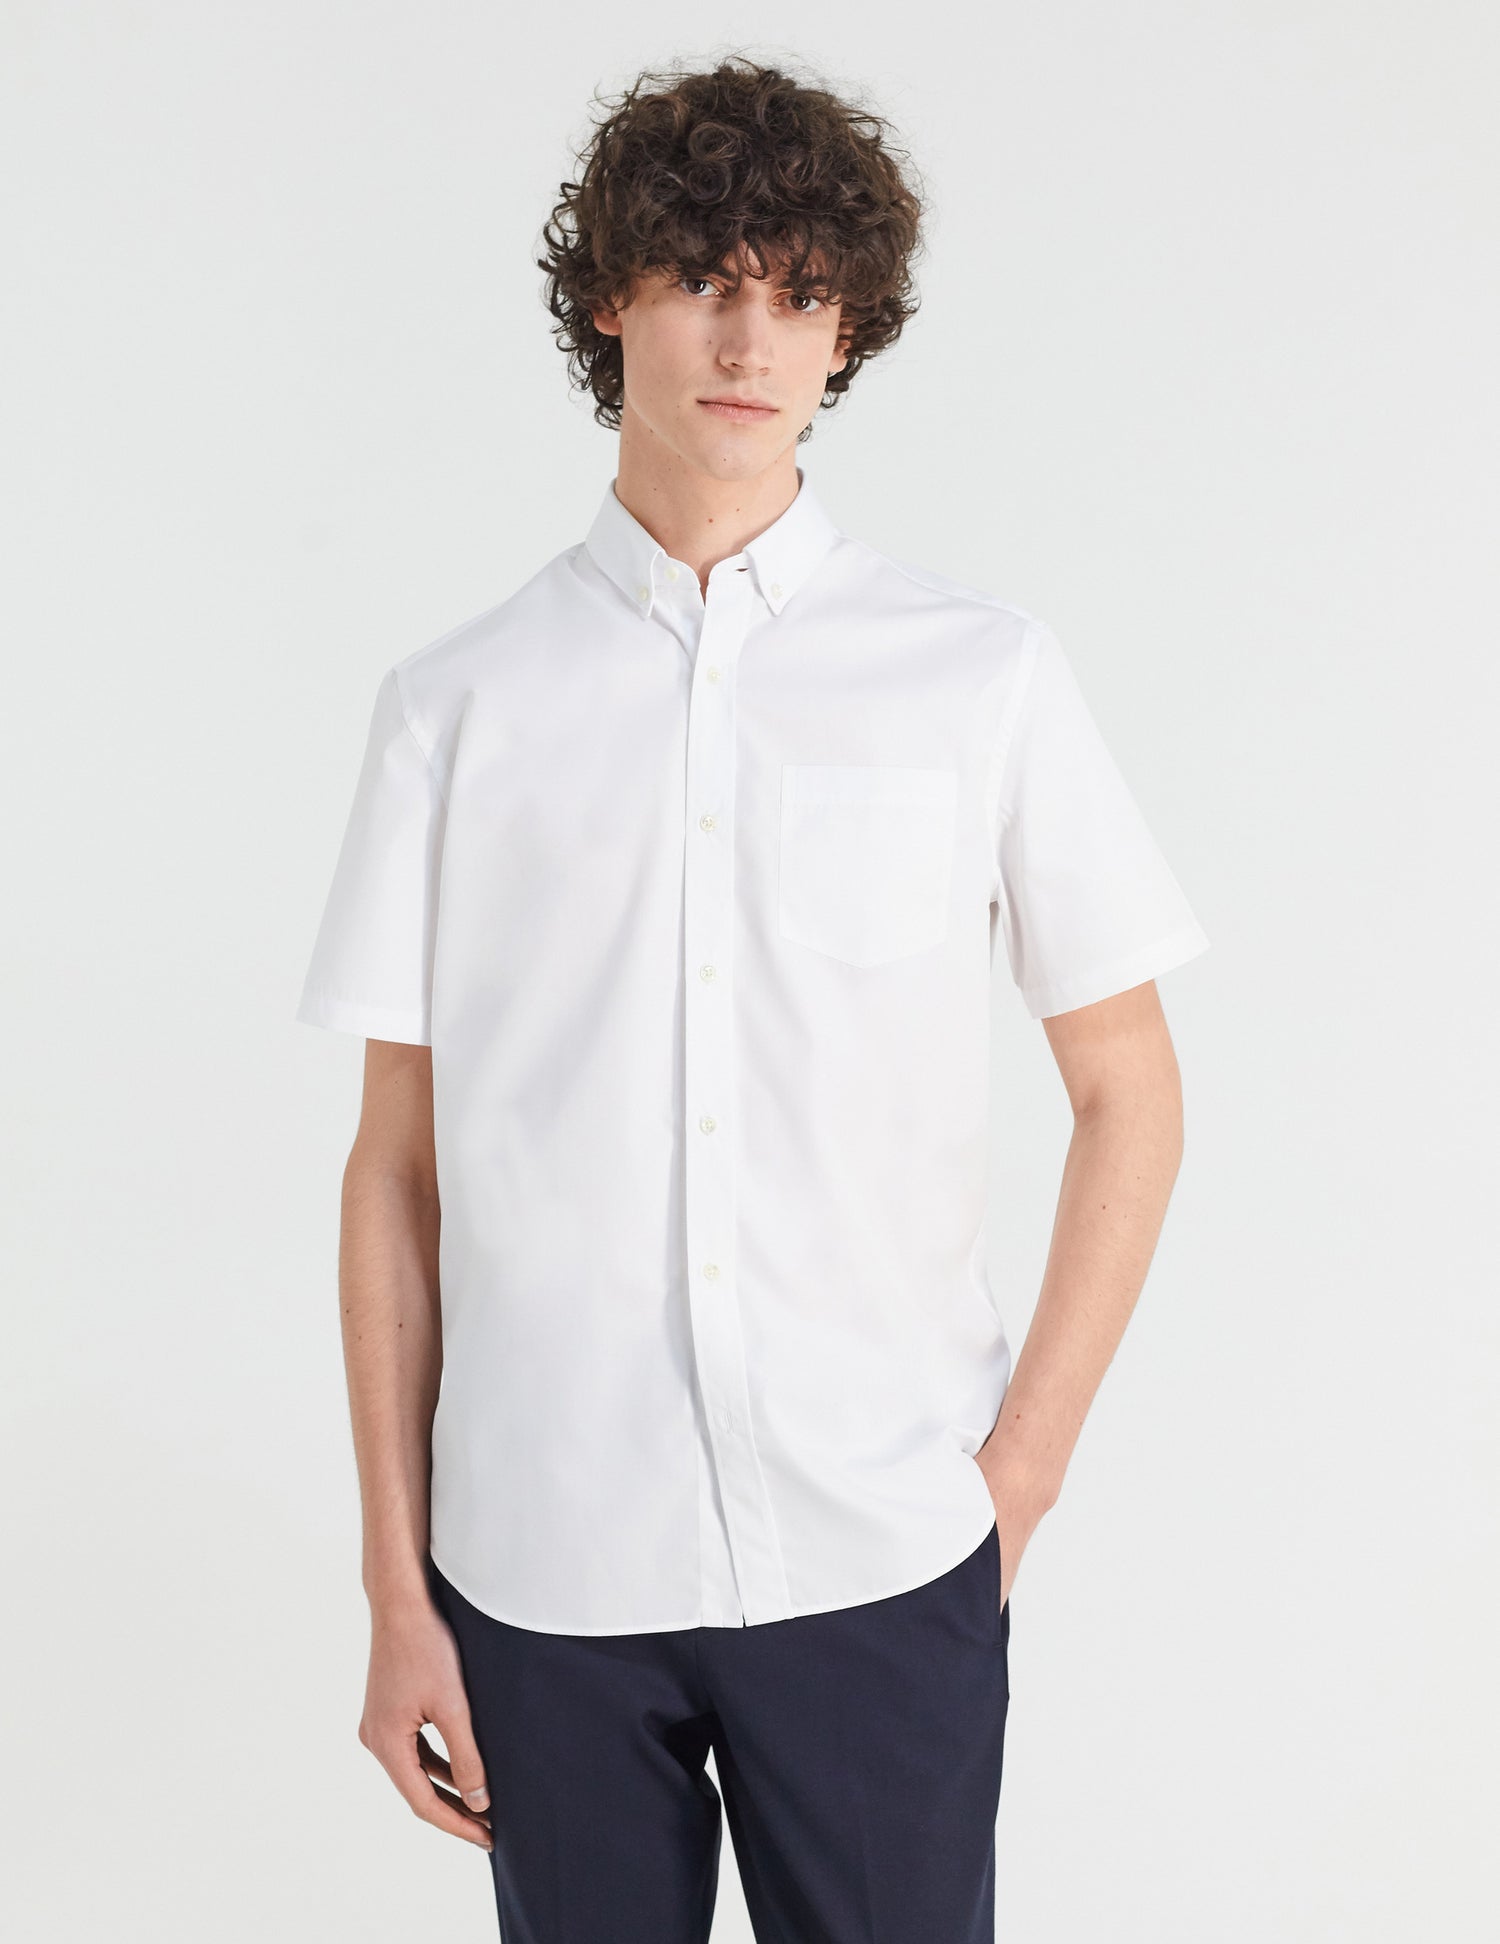 Classic white short sleeve shirt - Poplin - American Collar#3